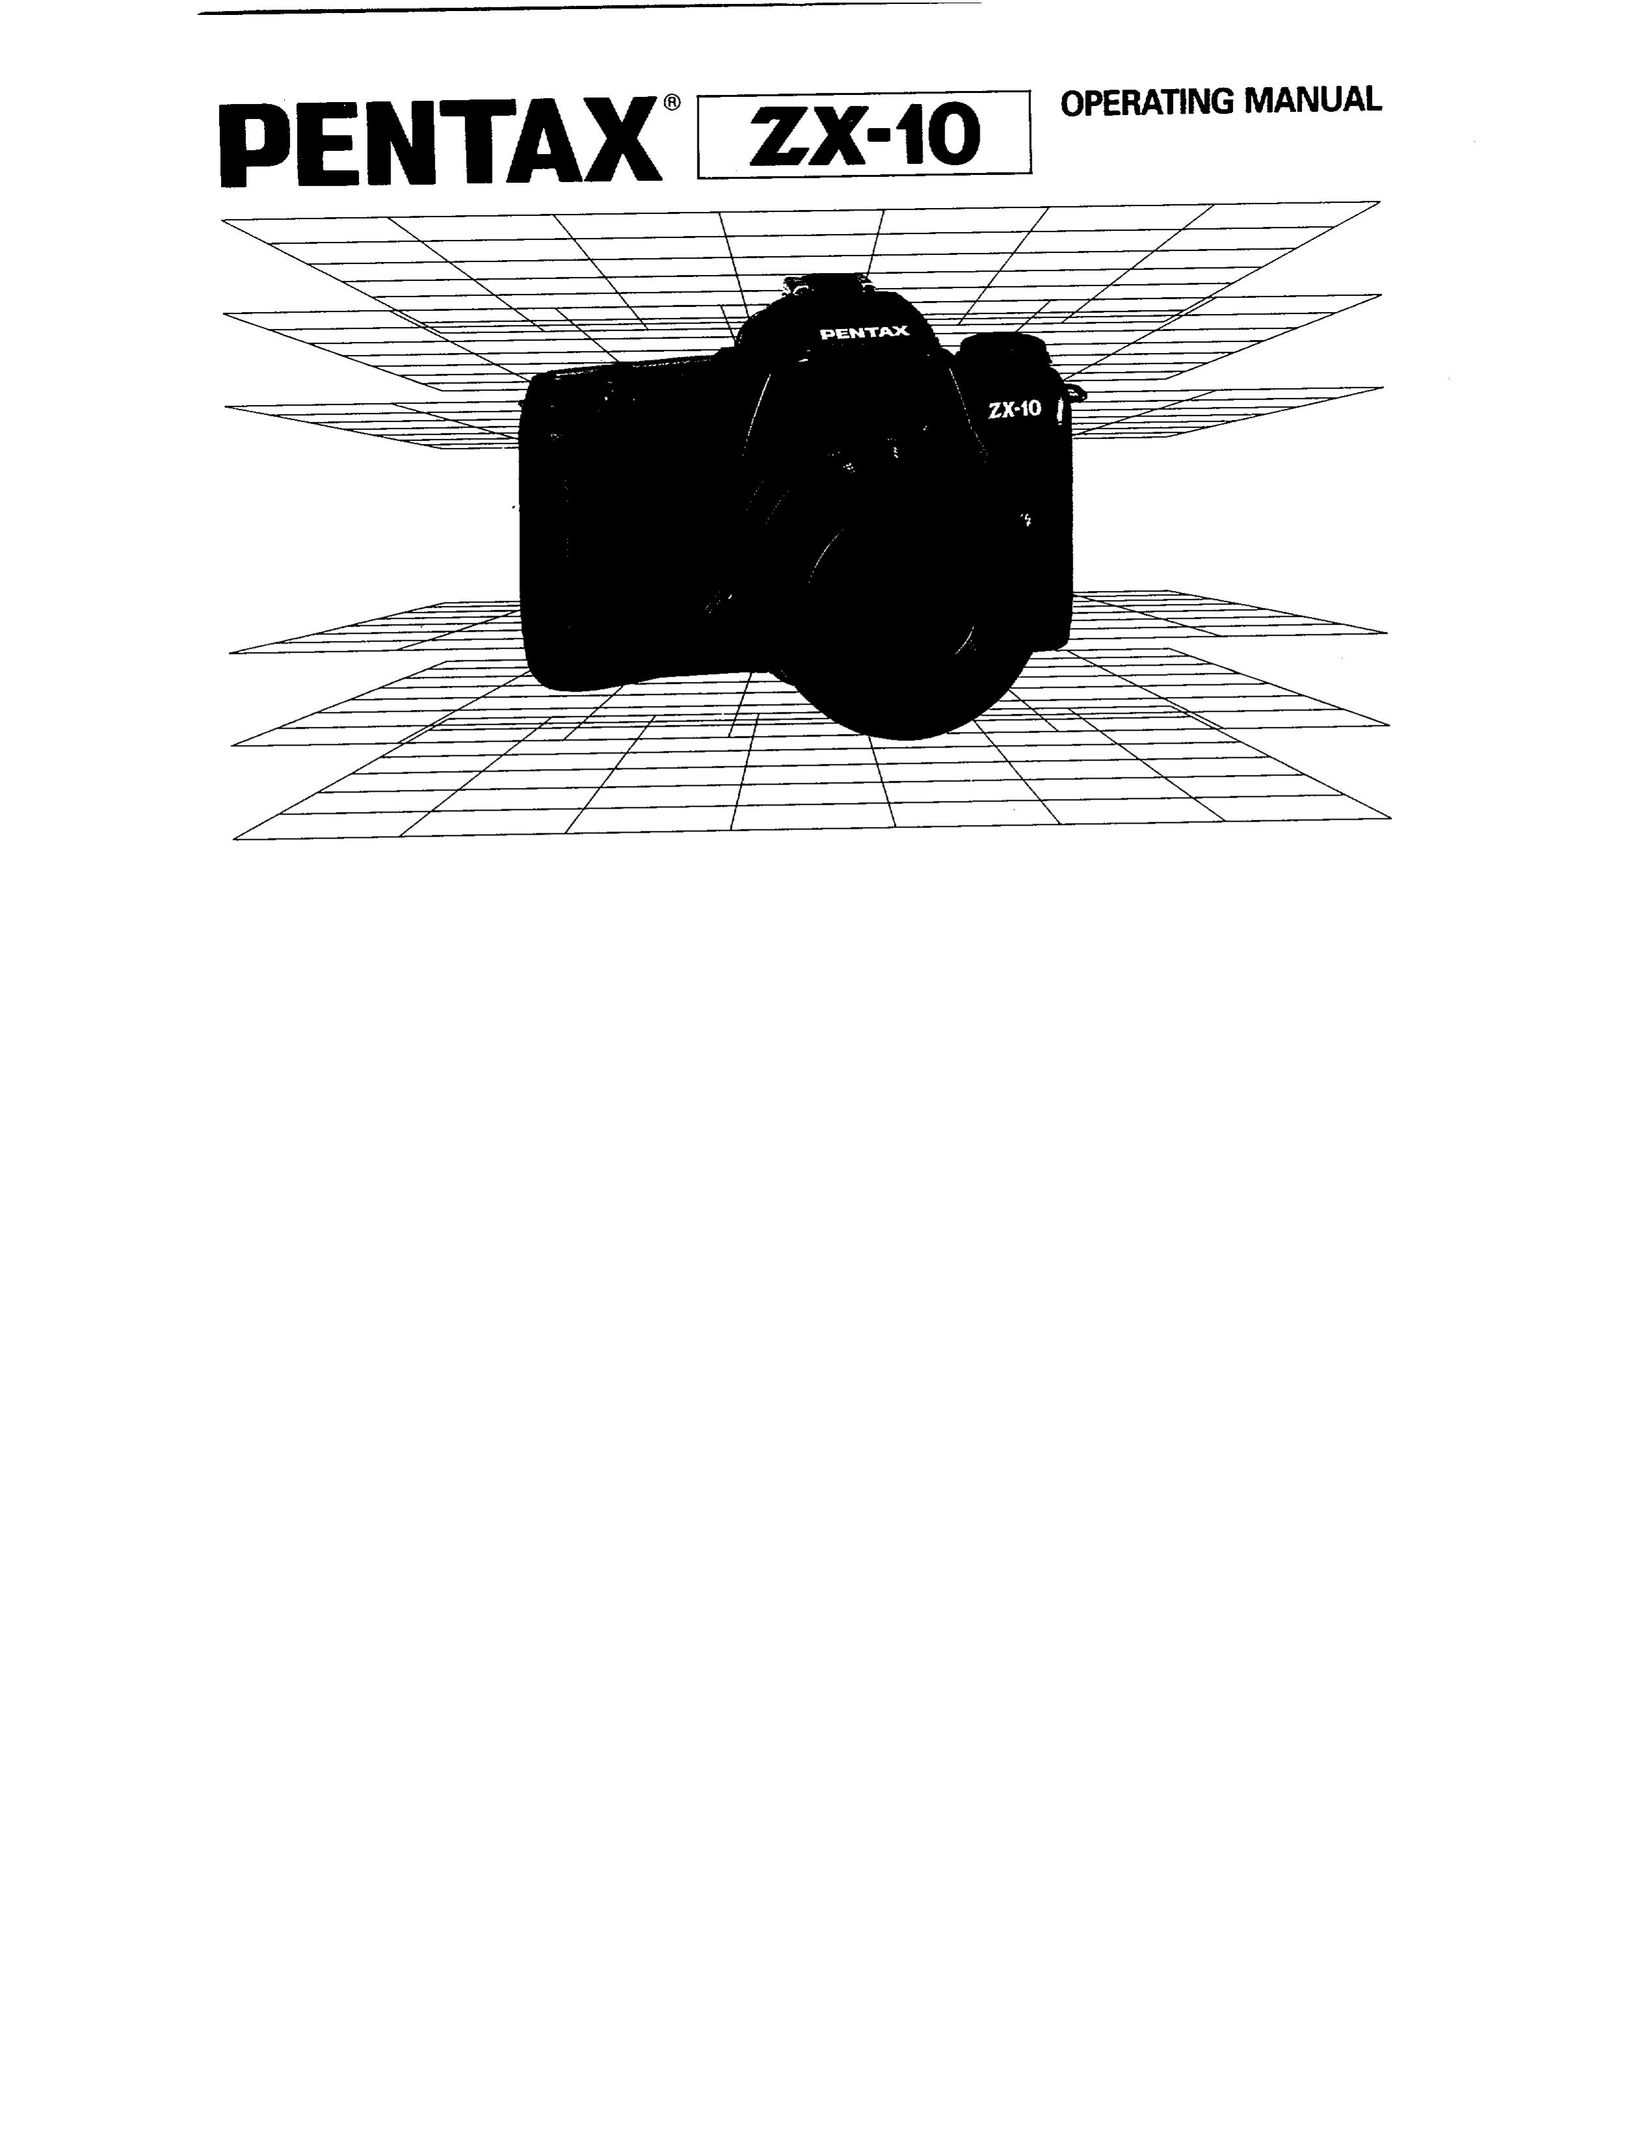 Pentax zx10 Webcam User Manual